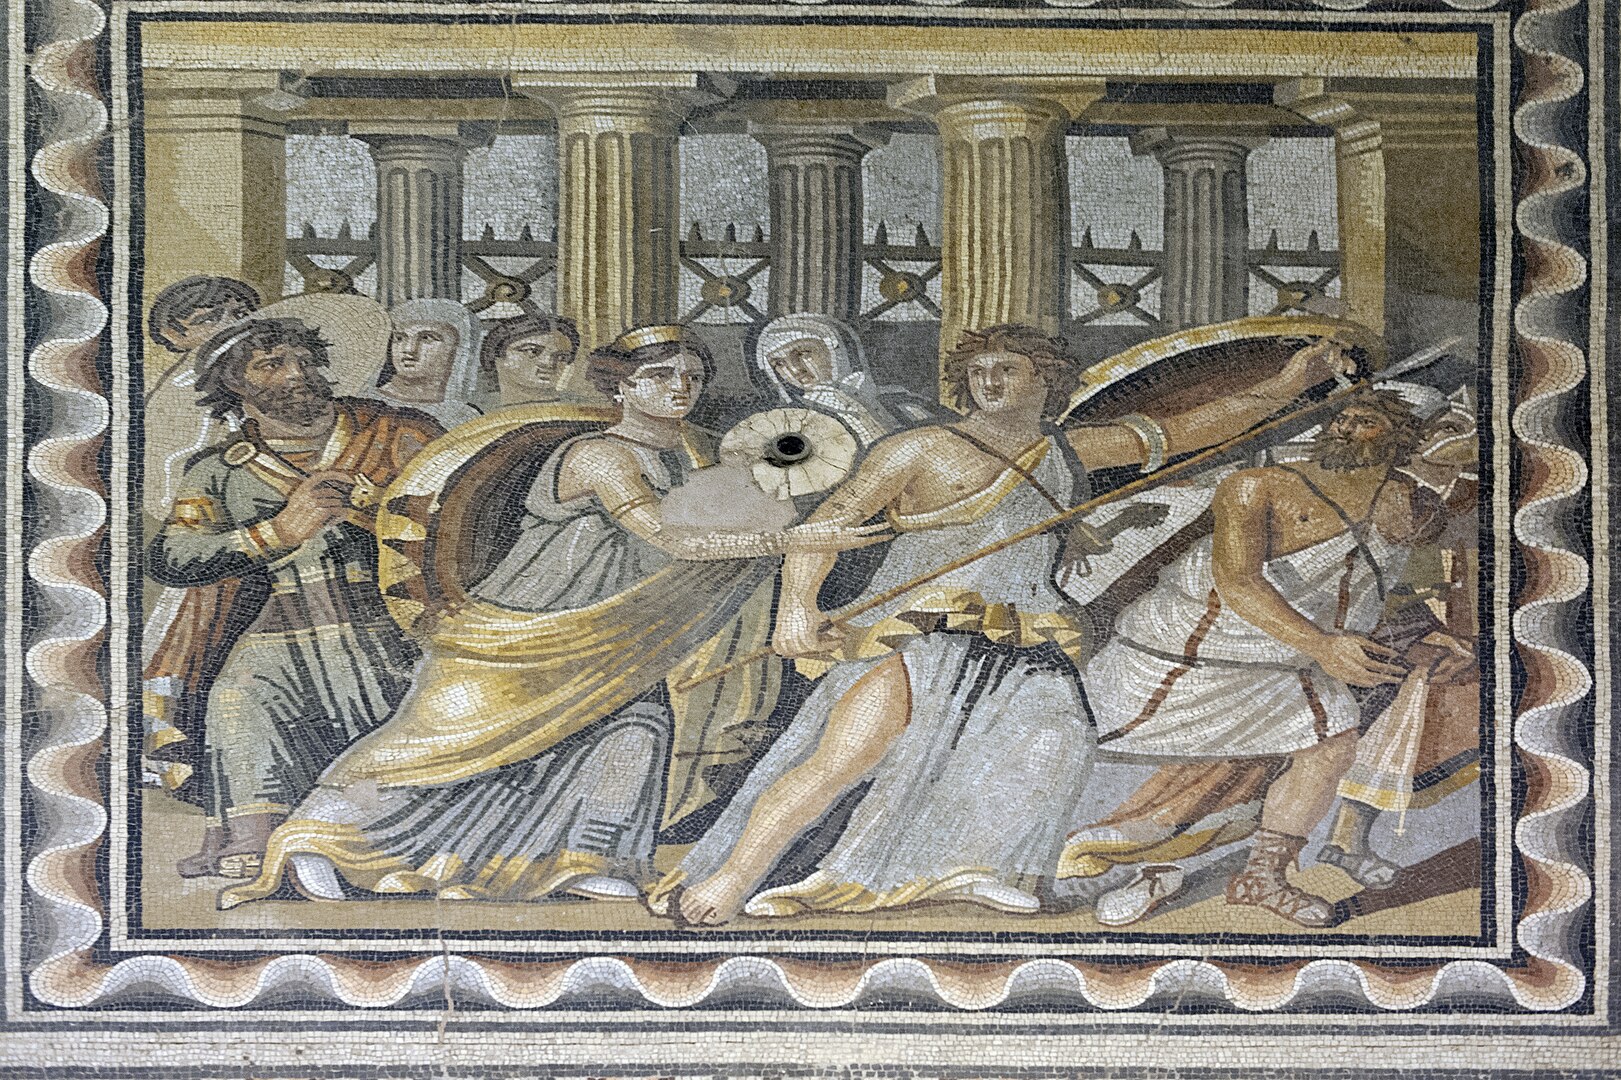 A mosaic from the Roman era Poseidon Villa in Zeugma, Commagene